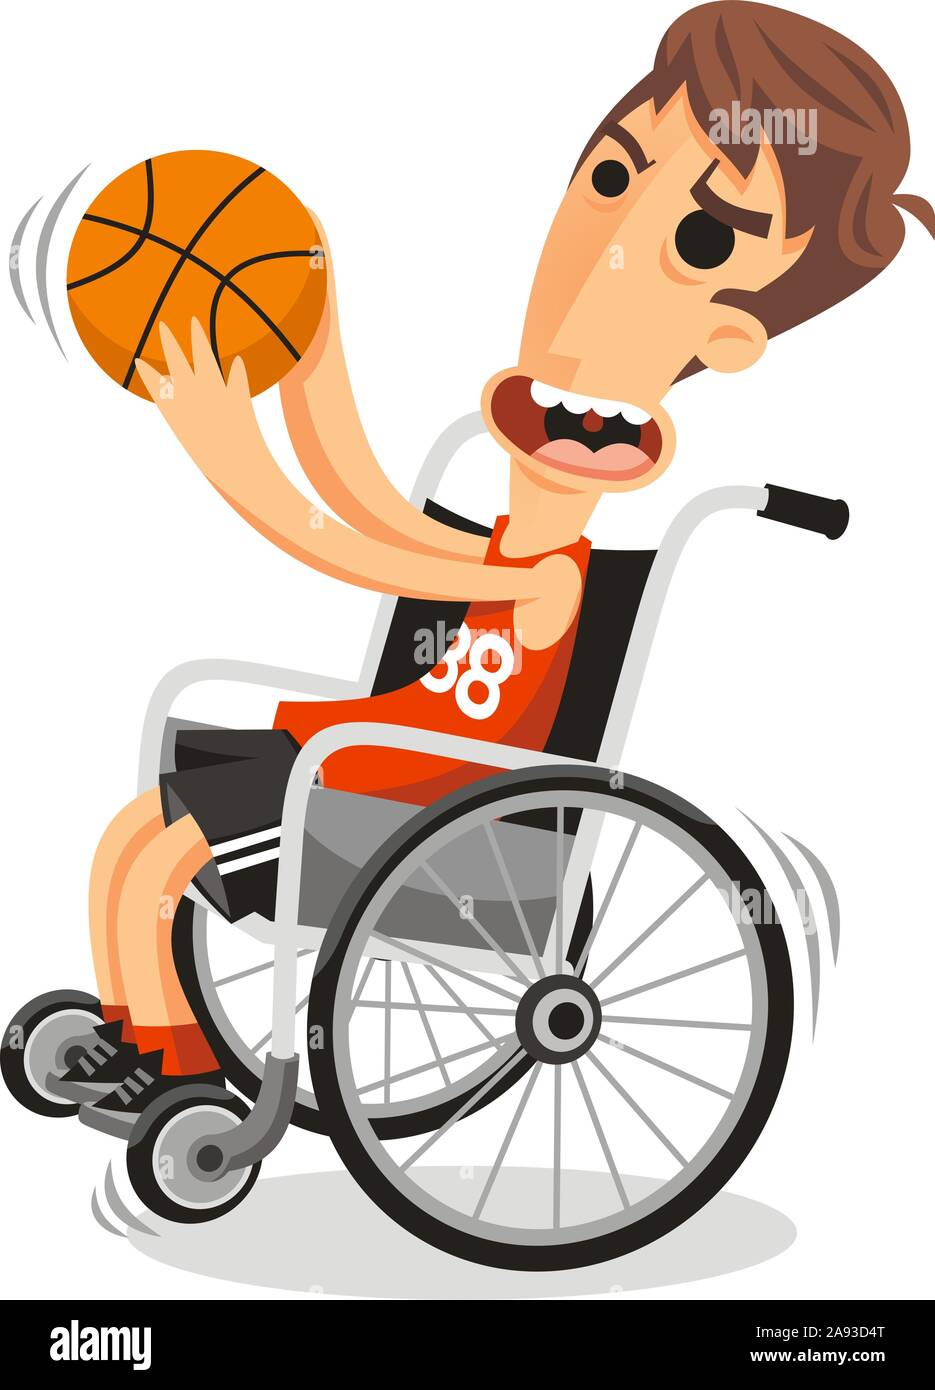 Wheelchair basketball player, vector illustration cartoon. Stock Vector